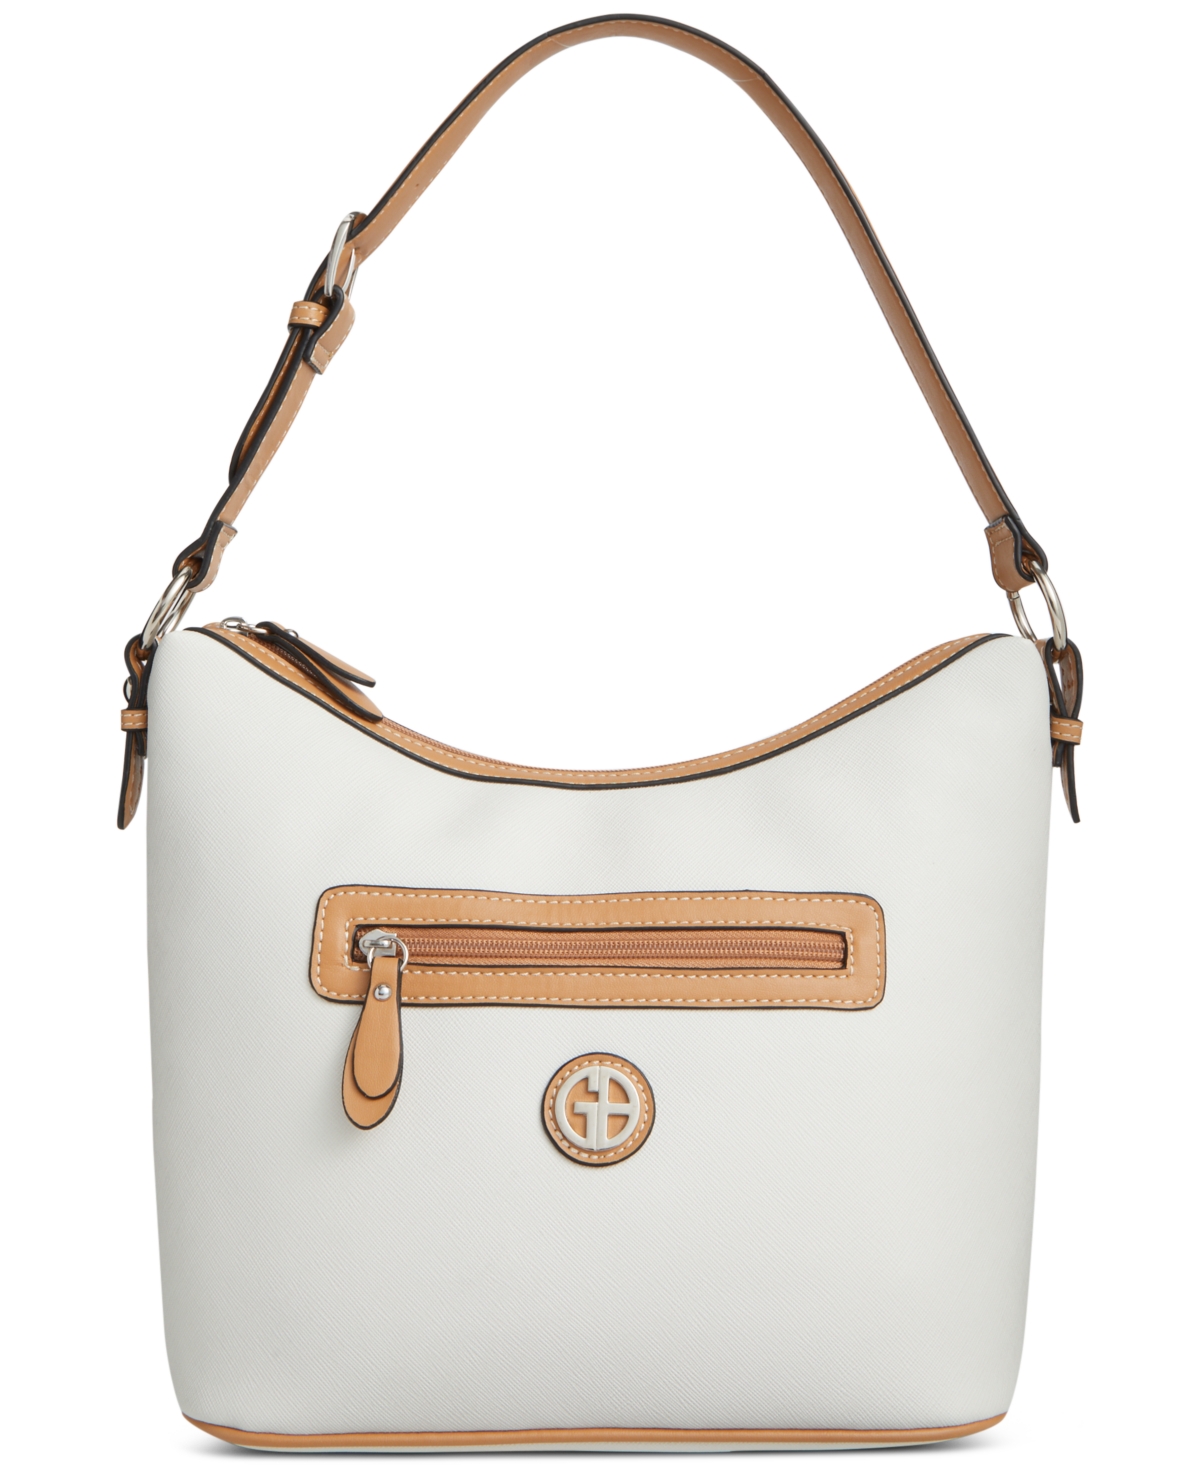 Saffiano Faux Leather Medium Hobo Bag, Created for Macy's - White